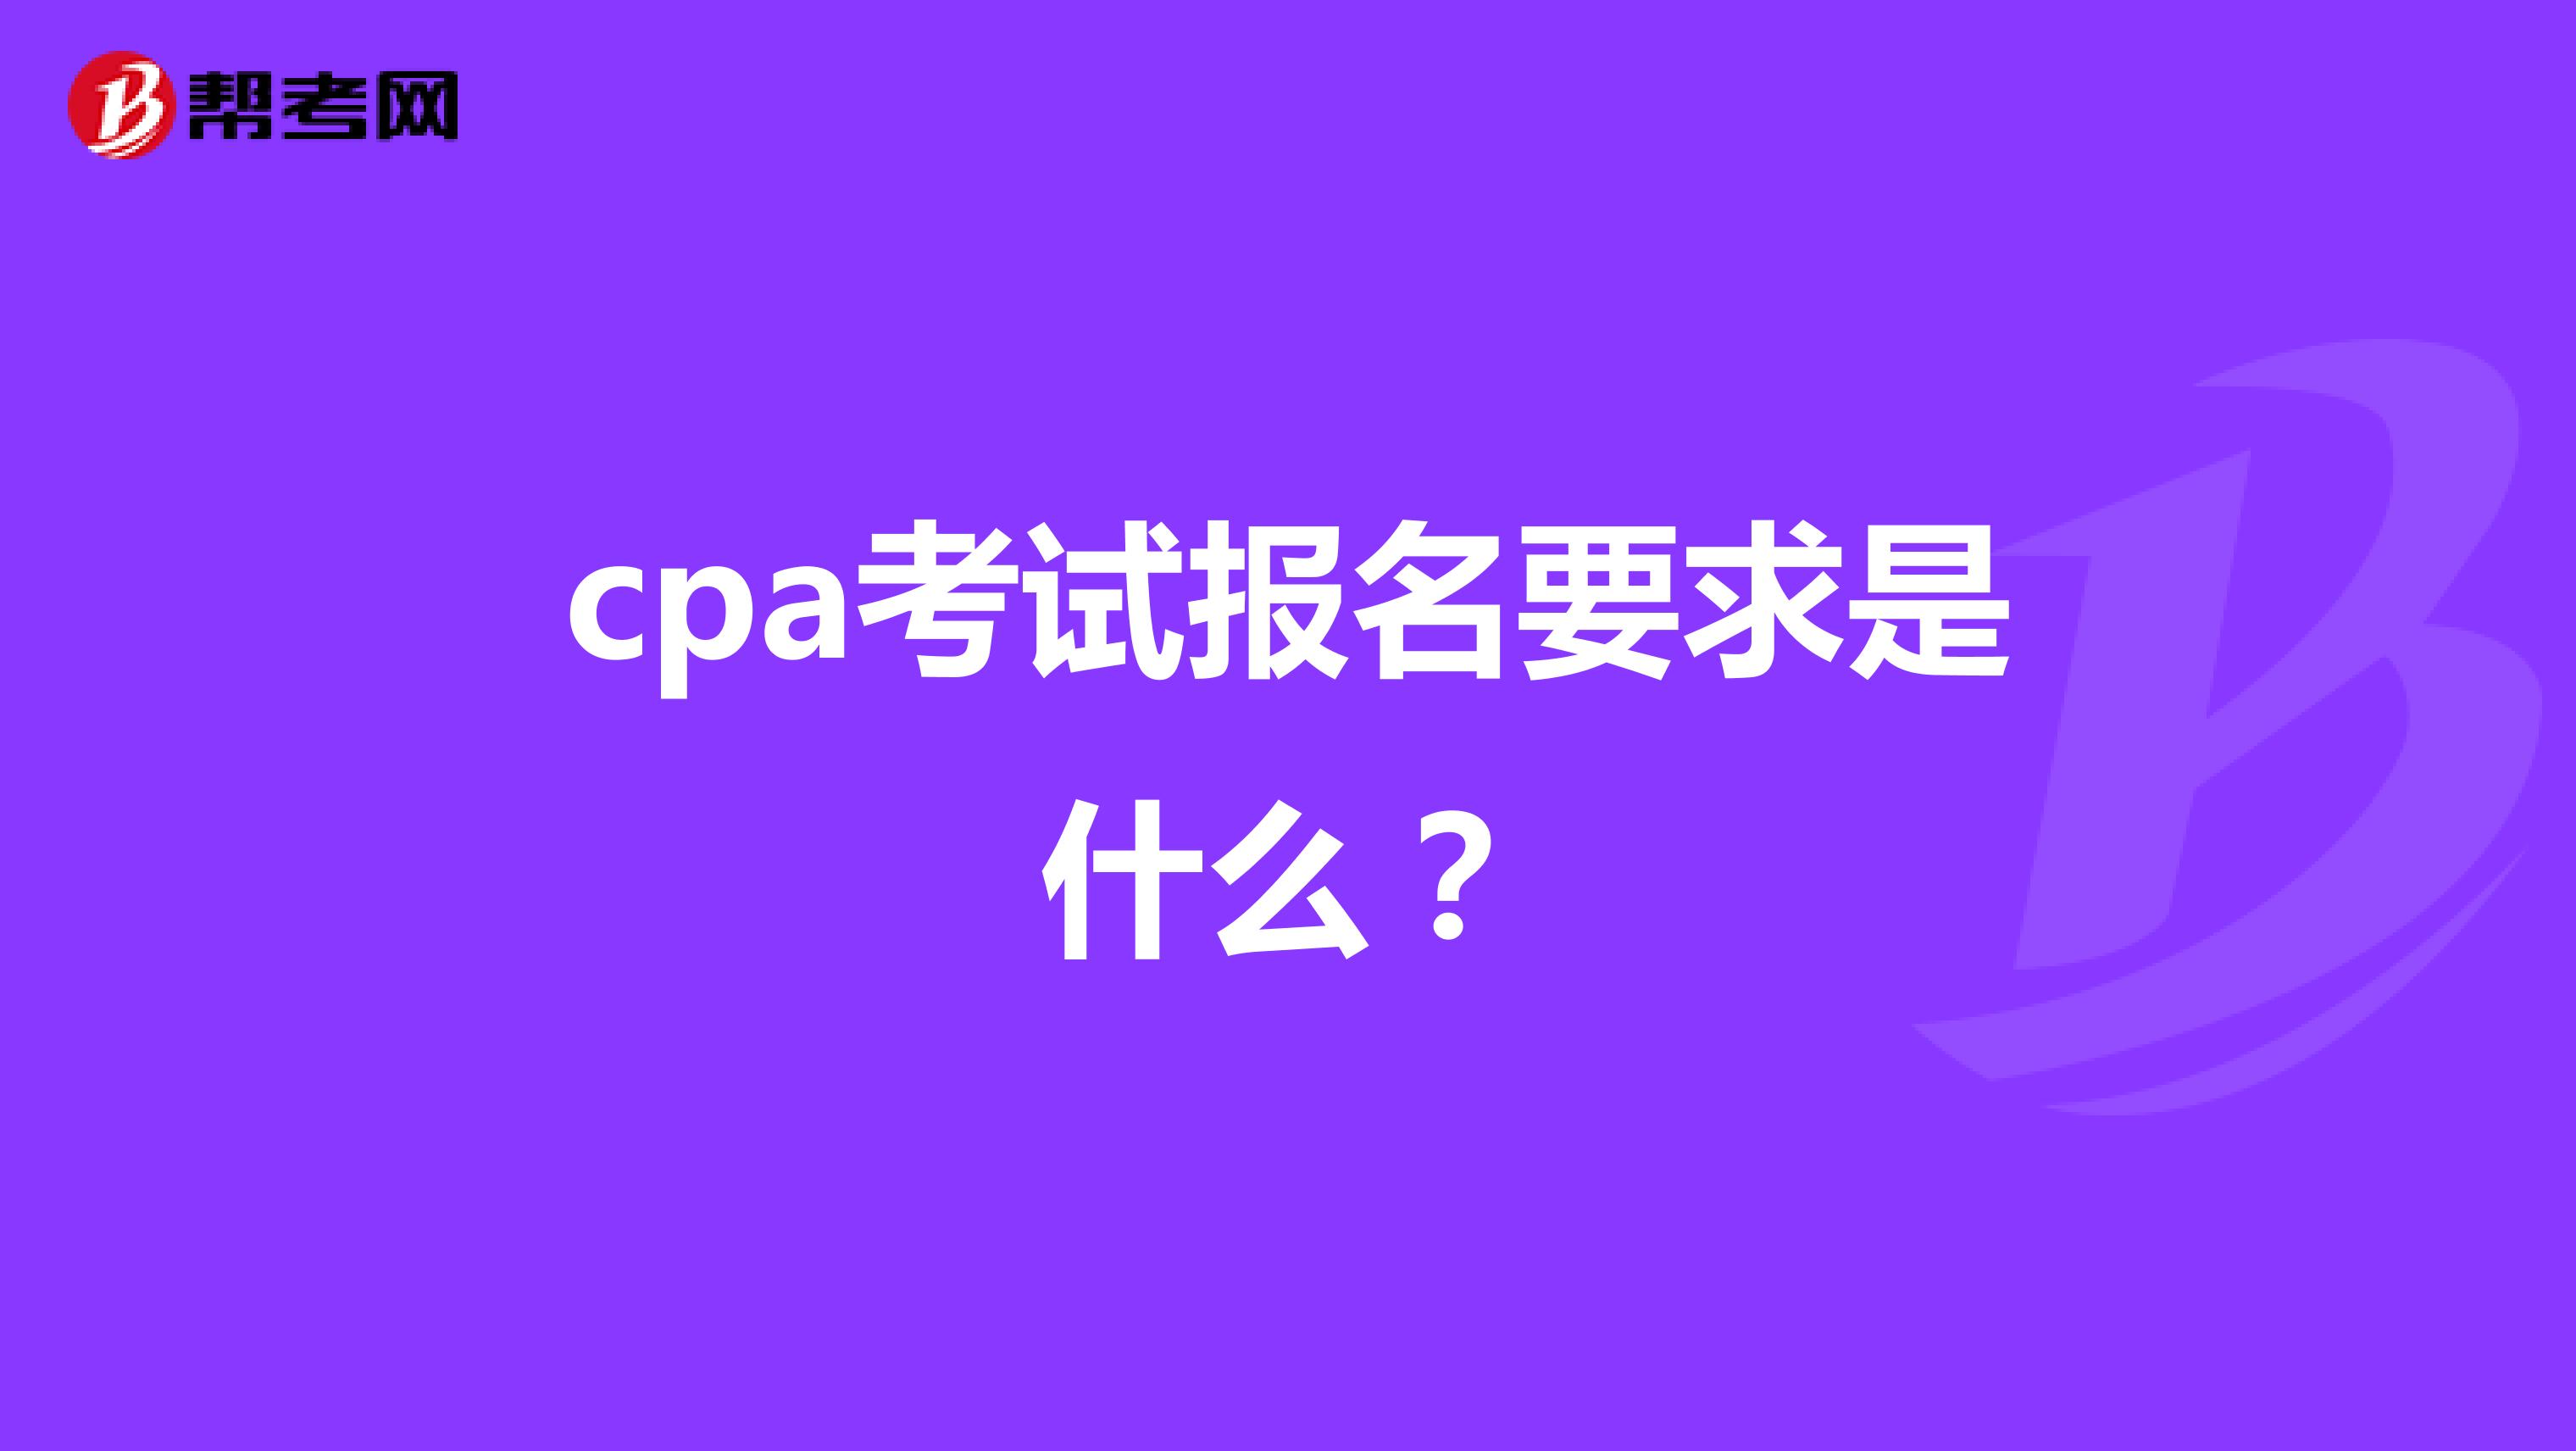 cpa考试报名要求是什么？